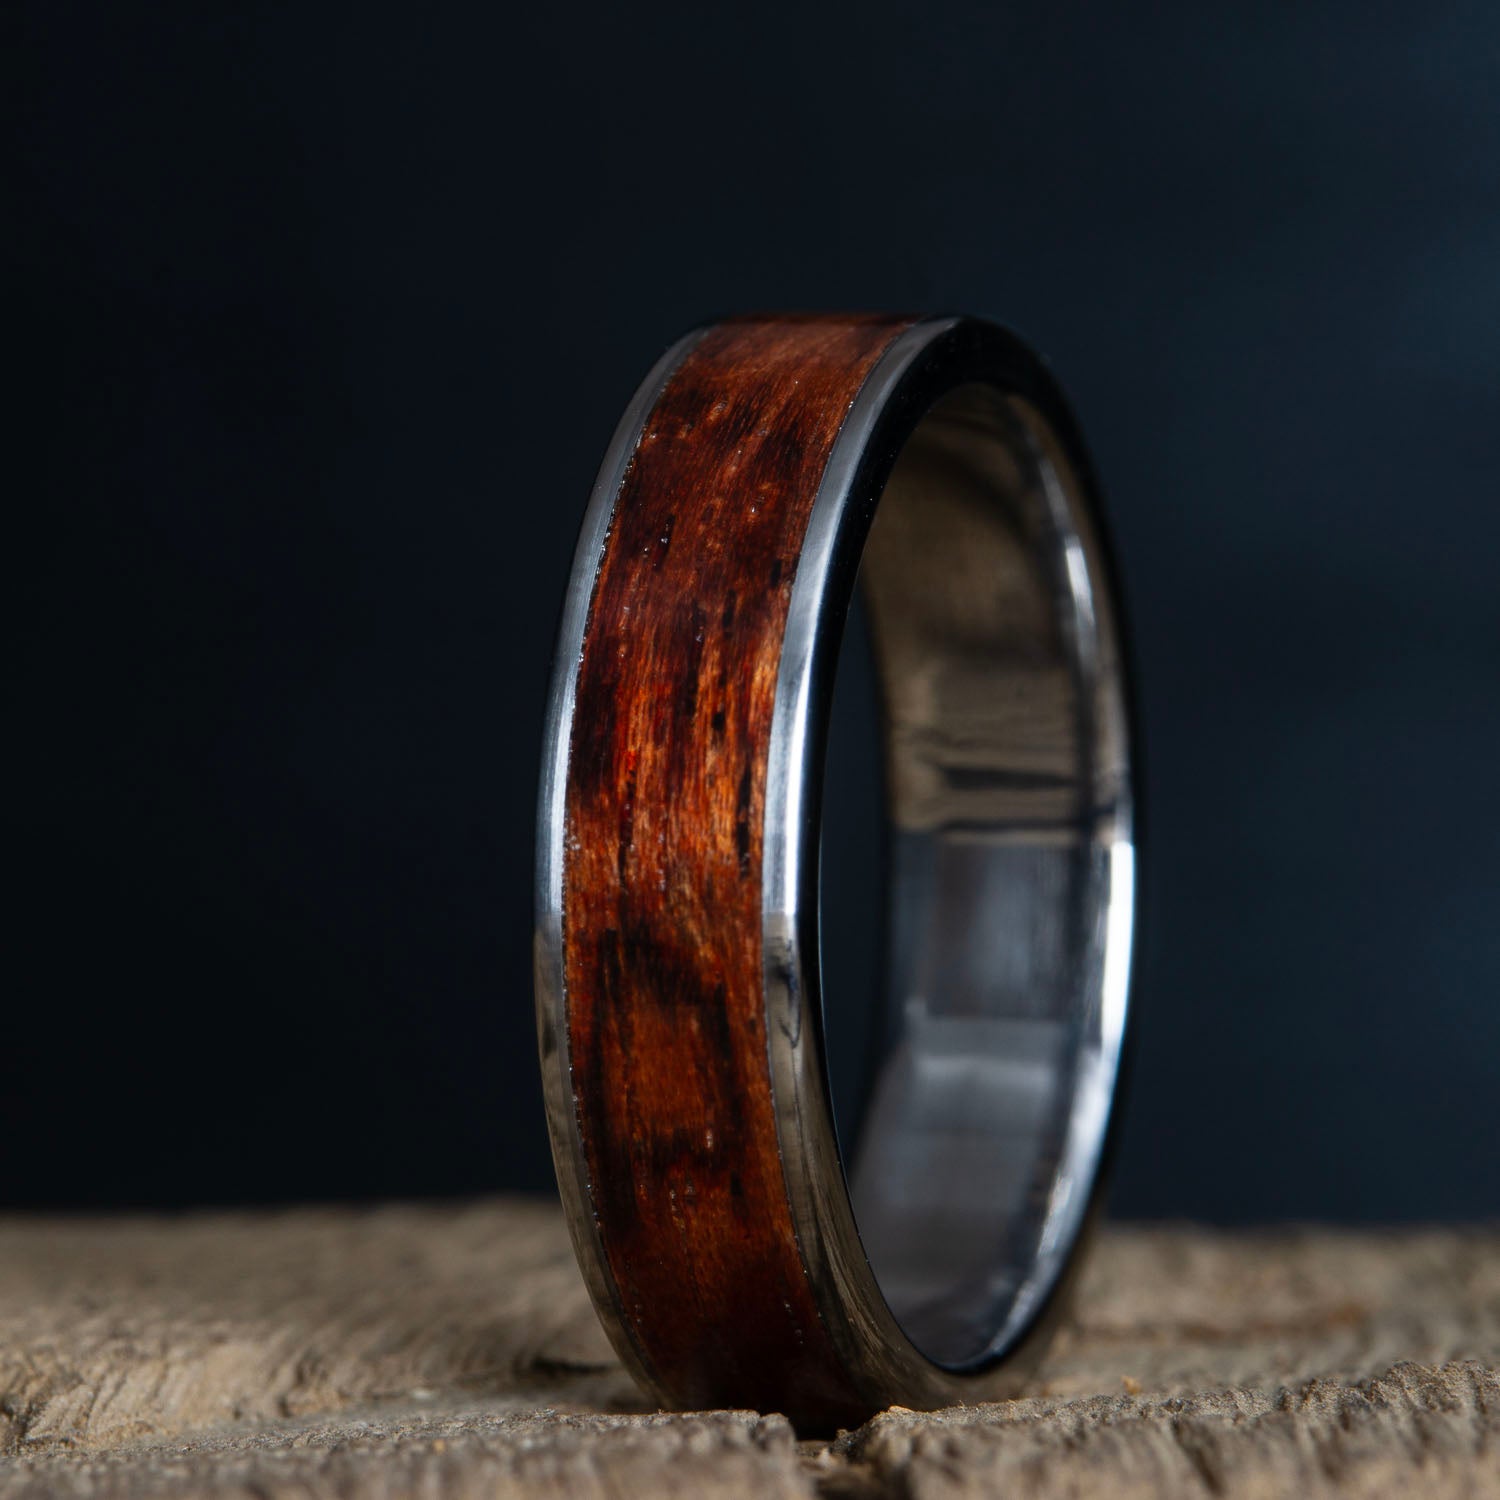 Bubinga wood inlay titanium ring 6mm wide